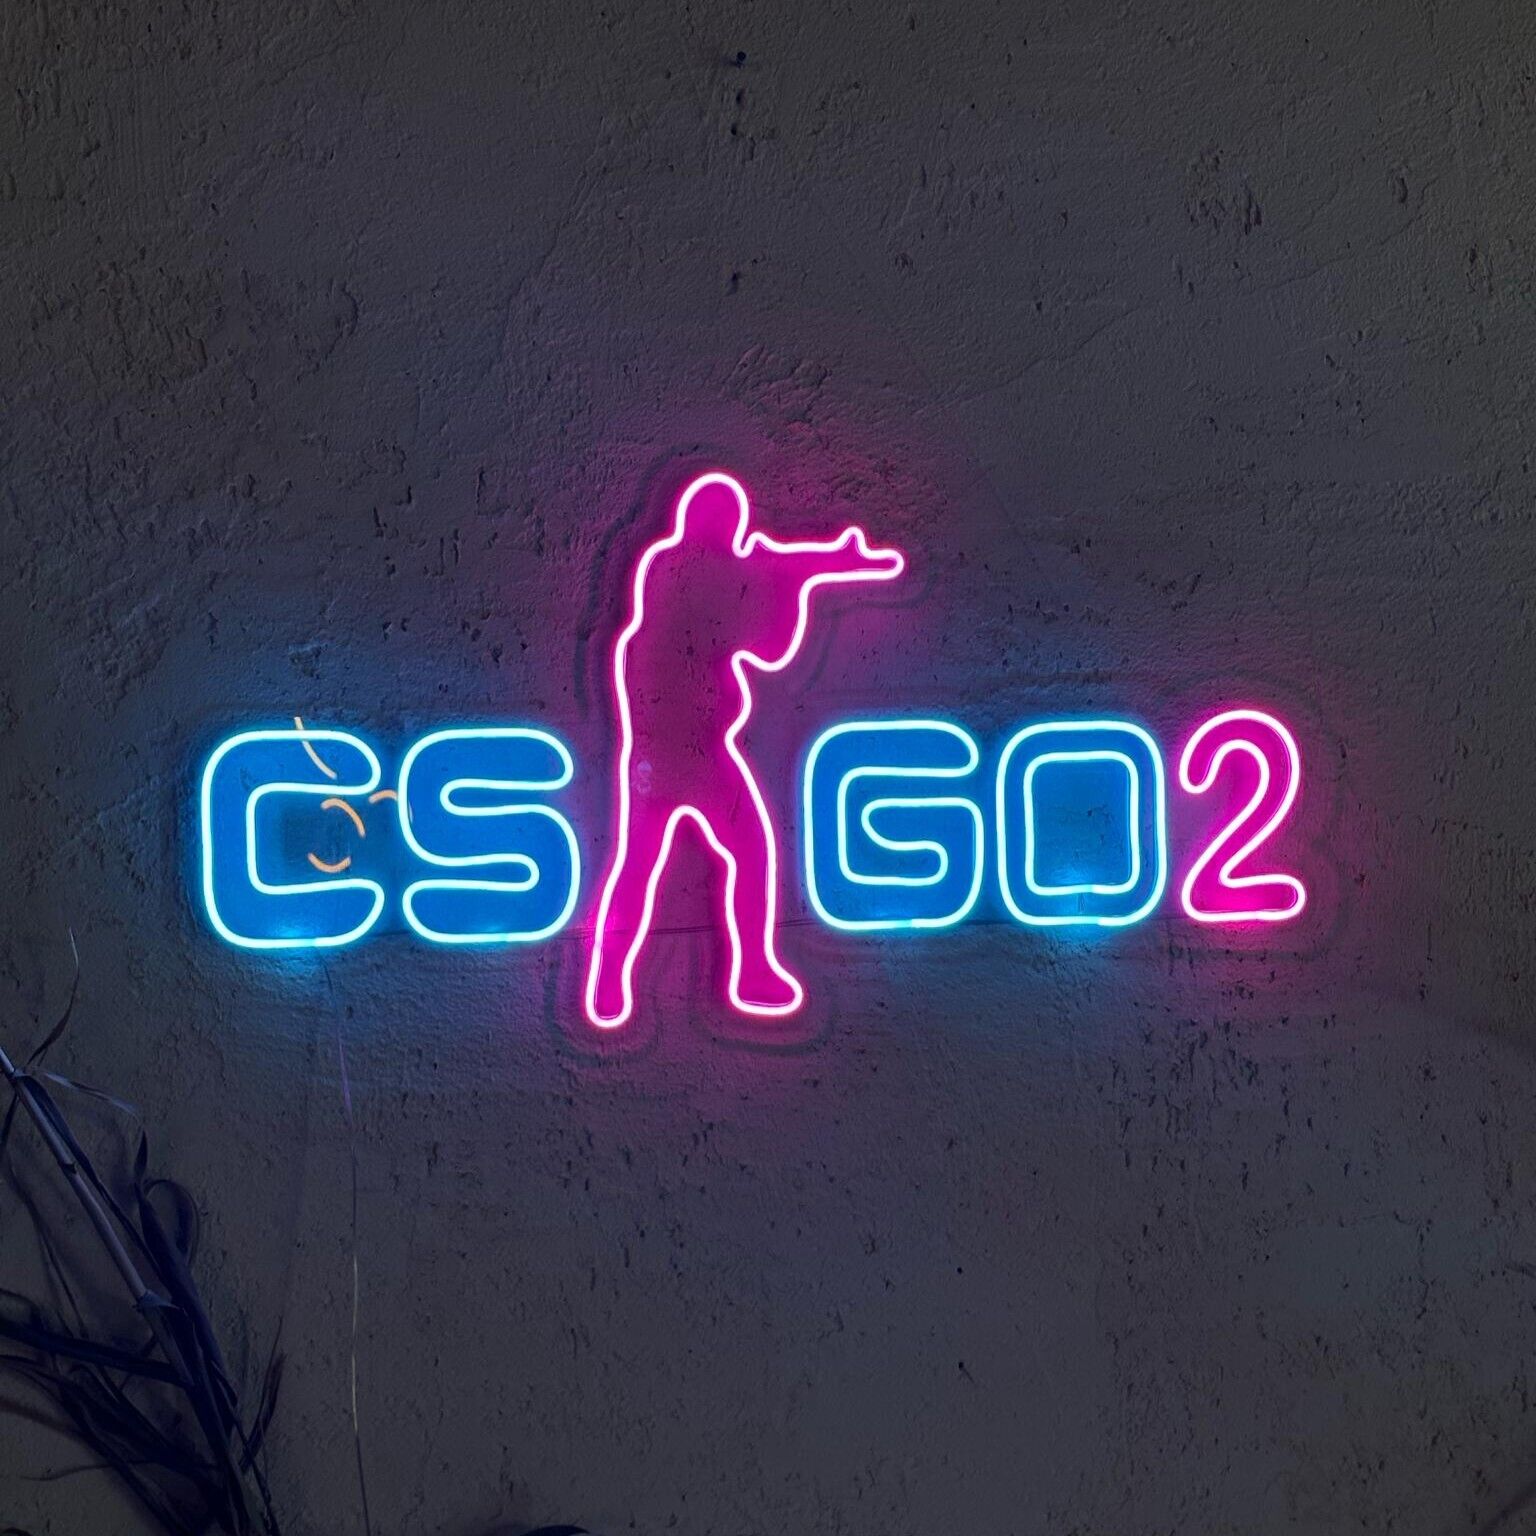 CS GO Neon Sign, CS GO 2 Neon Sign, Gamer Room Decor, Gifts for Friends, CS GO